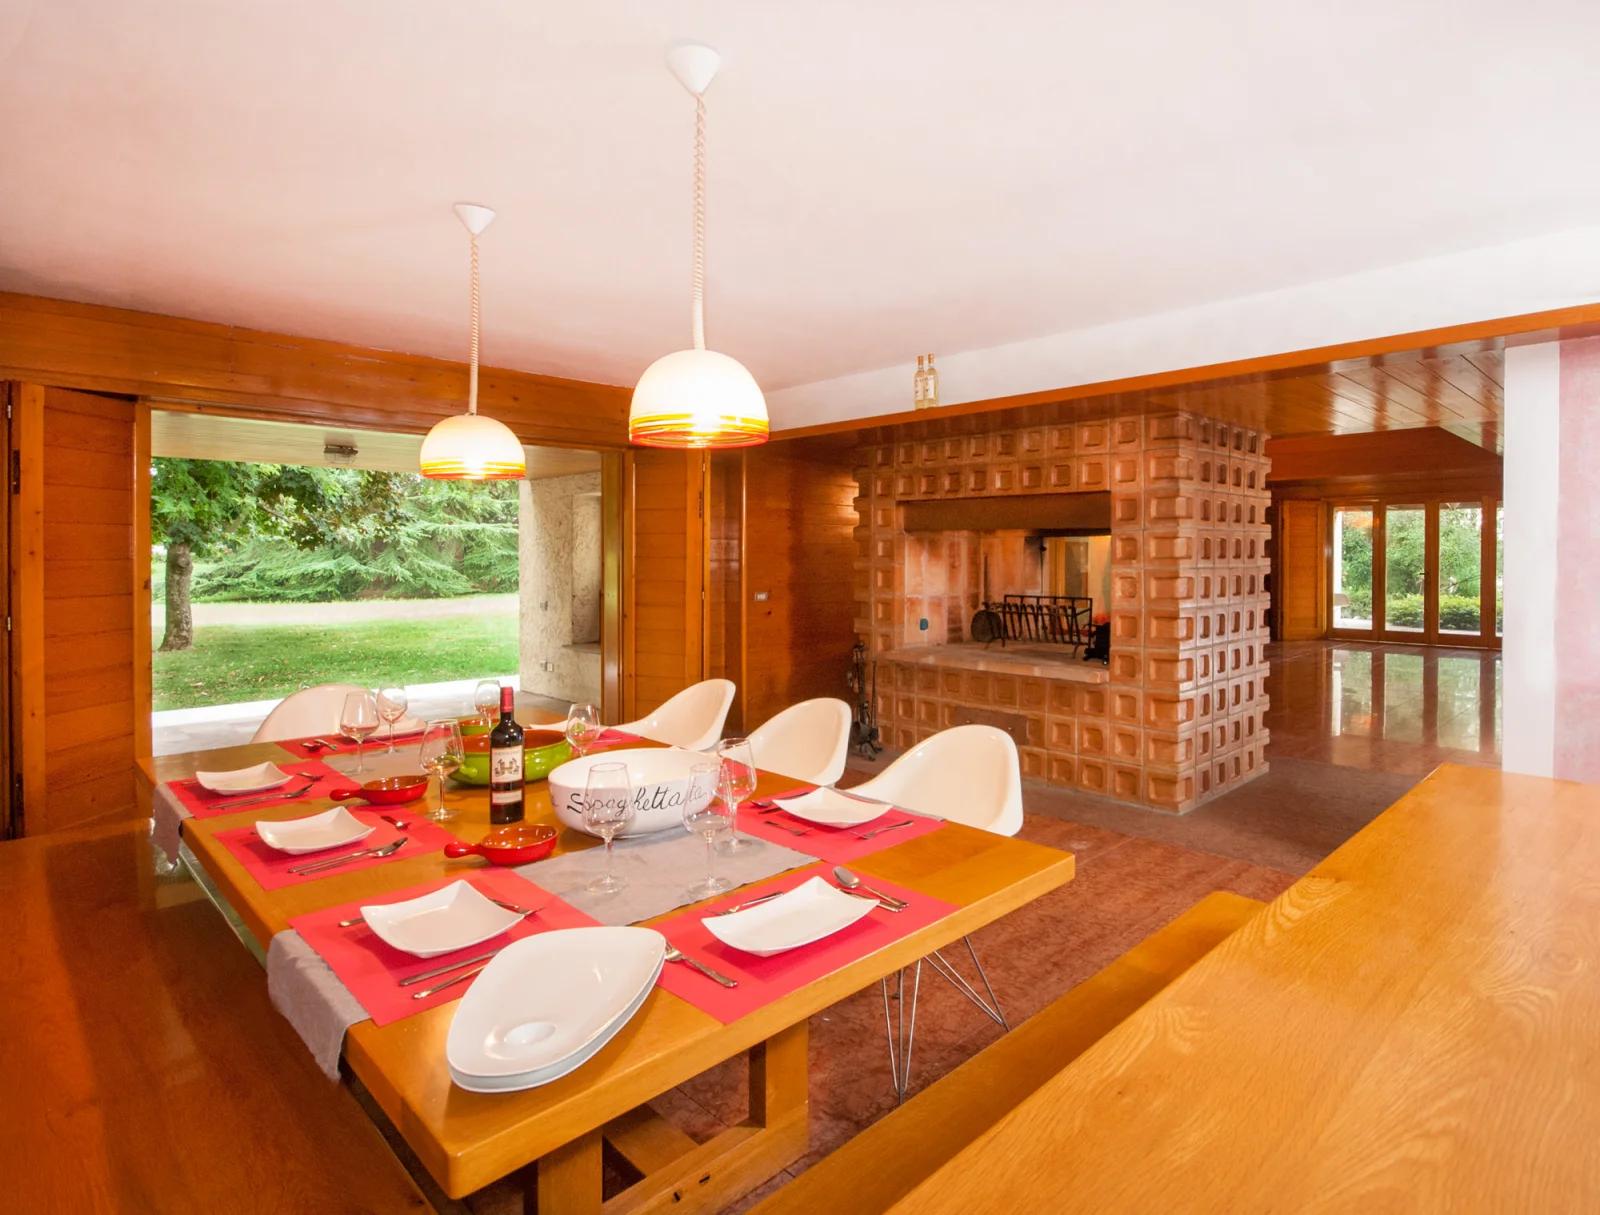 Comedor dentro Casa moderna y orgánica diseñada por un arquitecto - 3